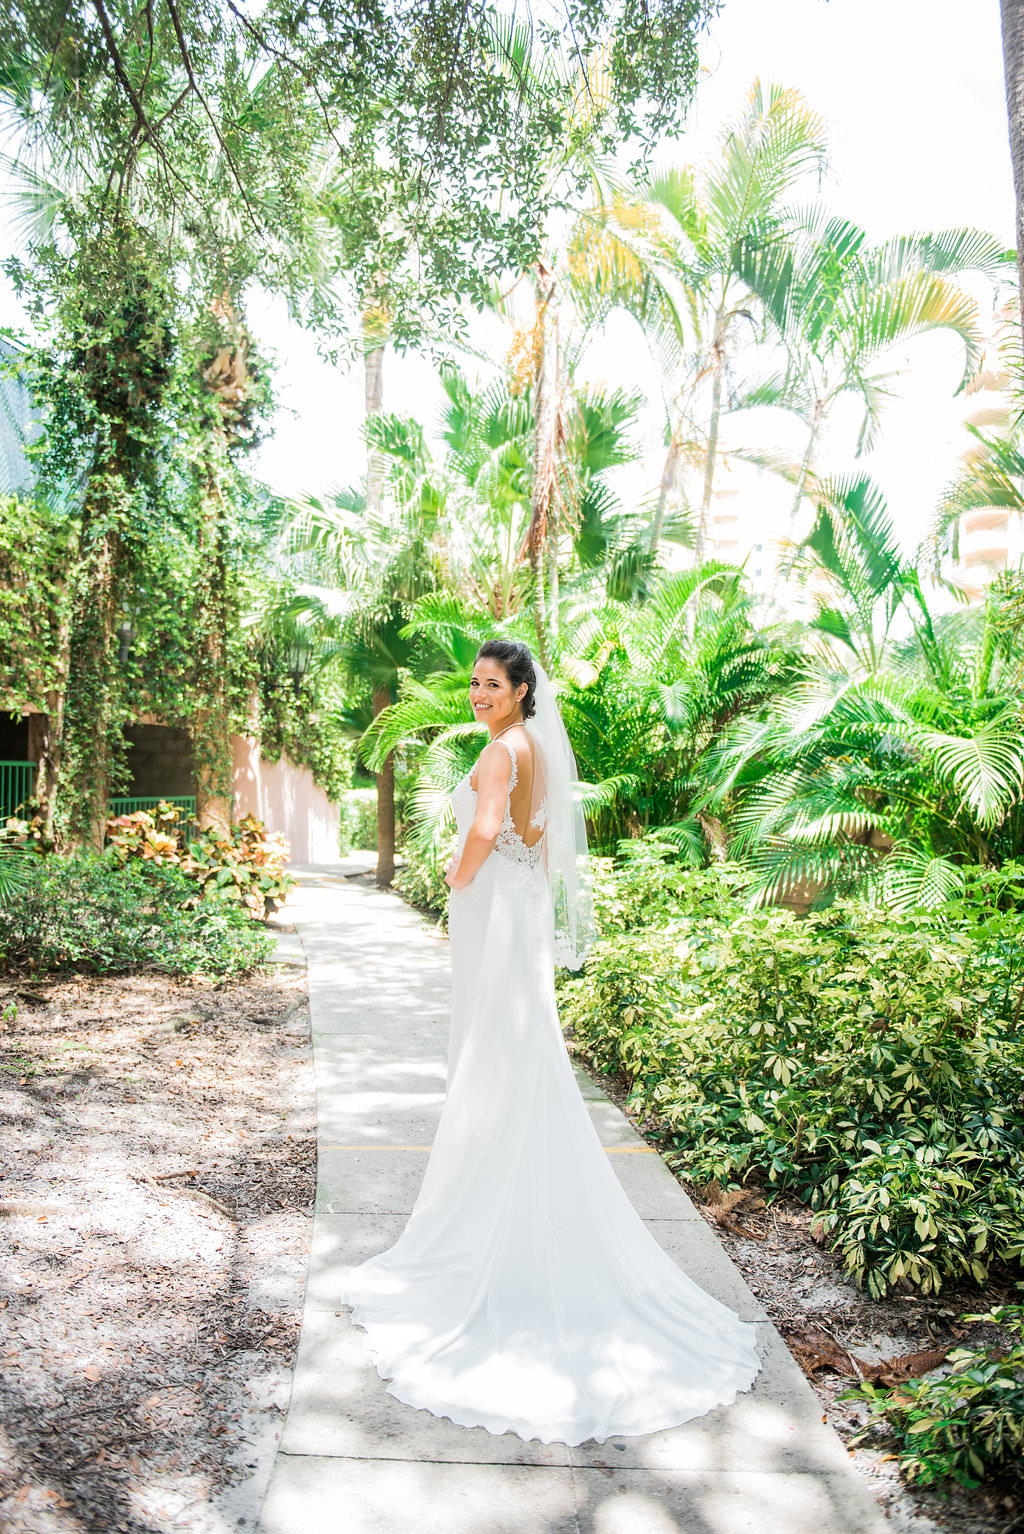 Bridal Wedding Portrait in Enzoani Dress | Tampa Bay Wedding Photographer Kera Photography